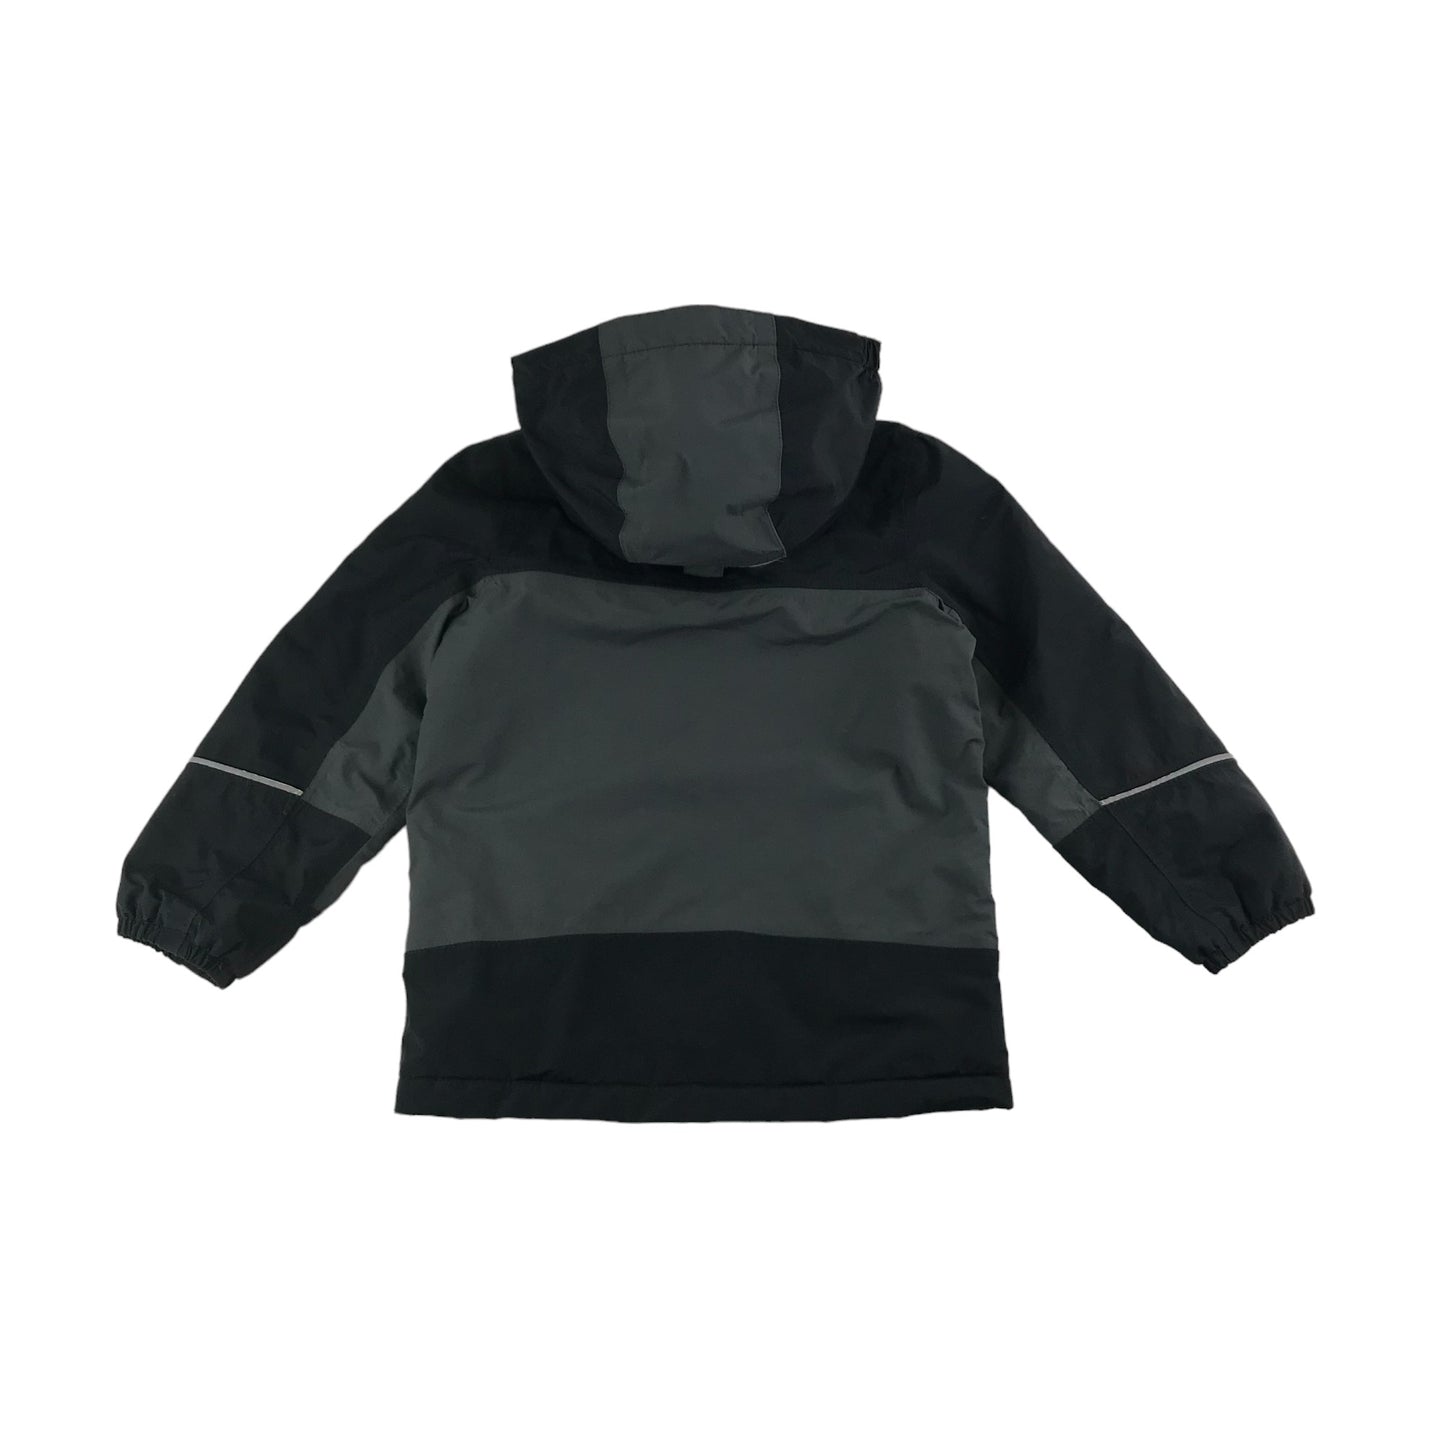 Berghaus Jacket Age 5 Grey Warm Padded with Hood